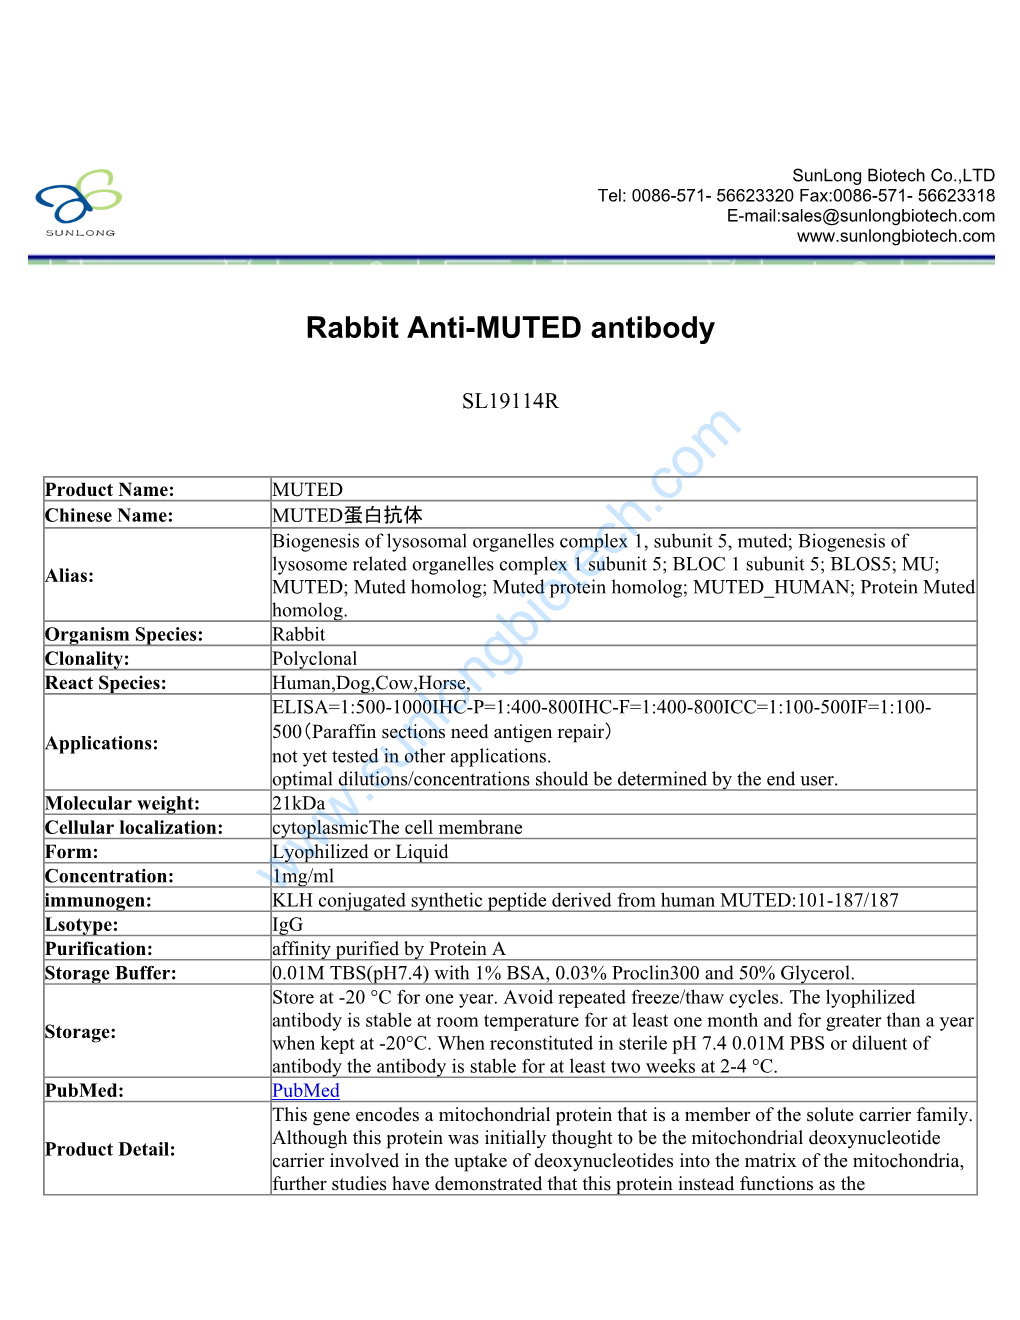 Rabbit Anti-MUTED Antibody-SL19114R